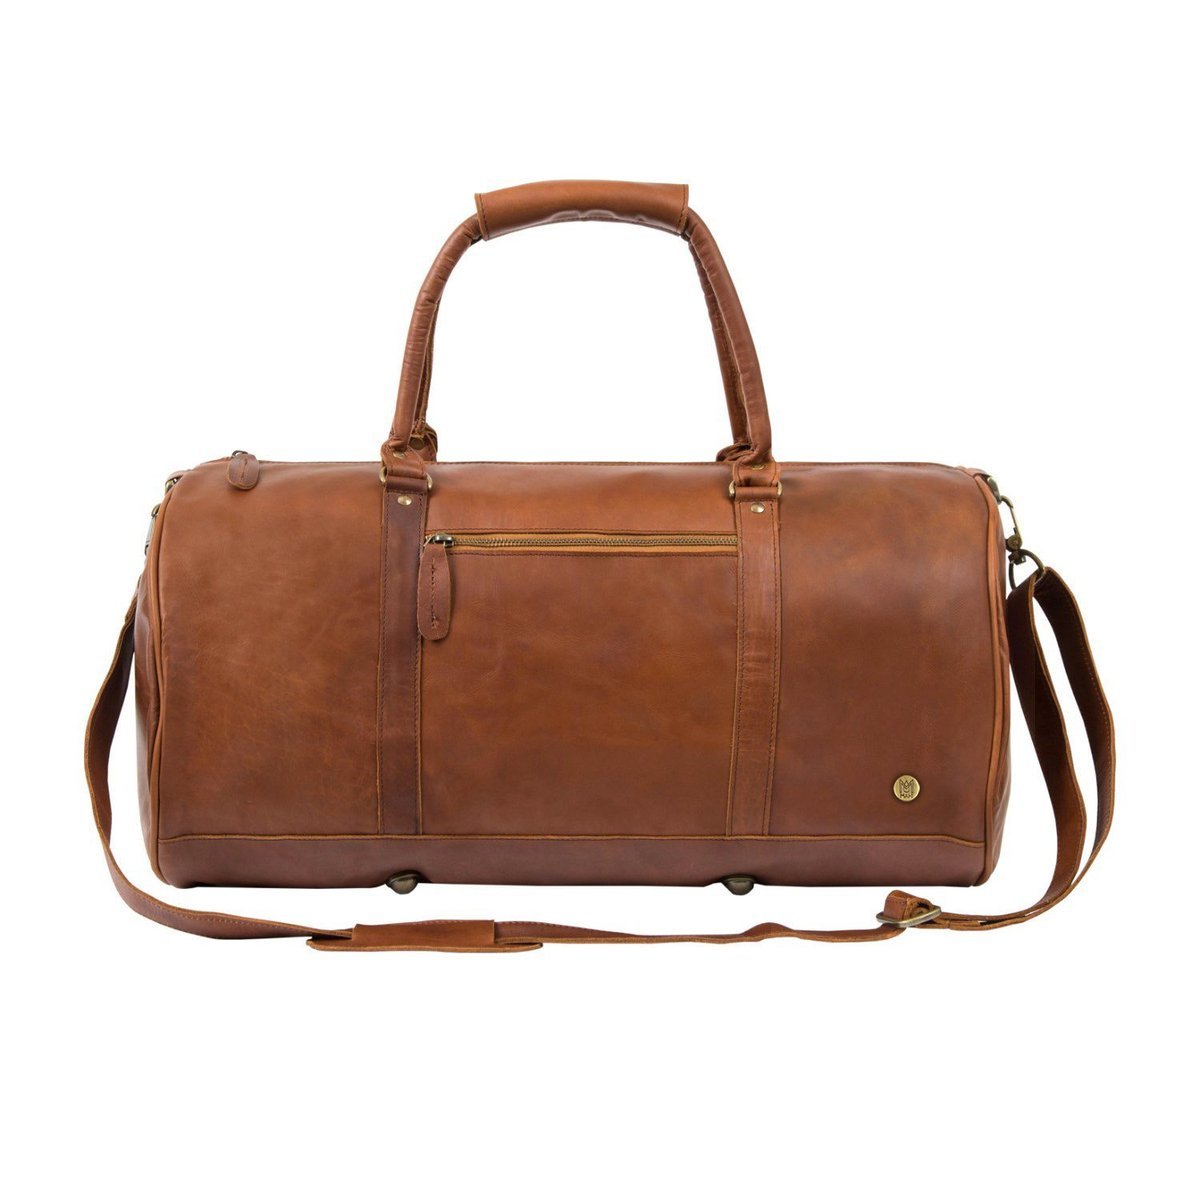 The Classic Duffle by Mahi. Leather bag. 